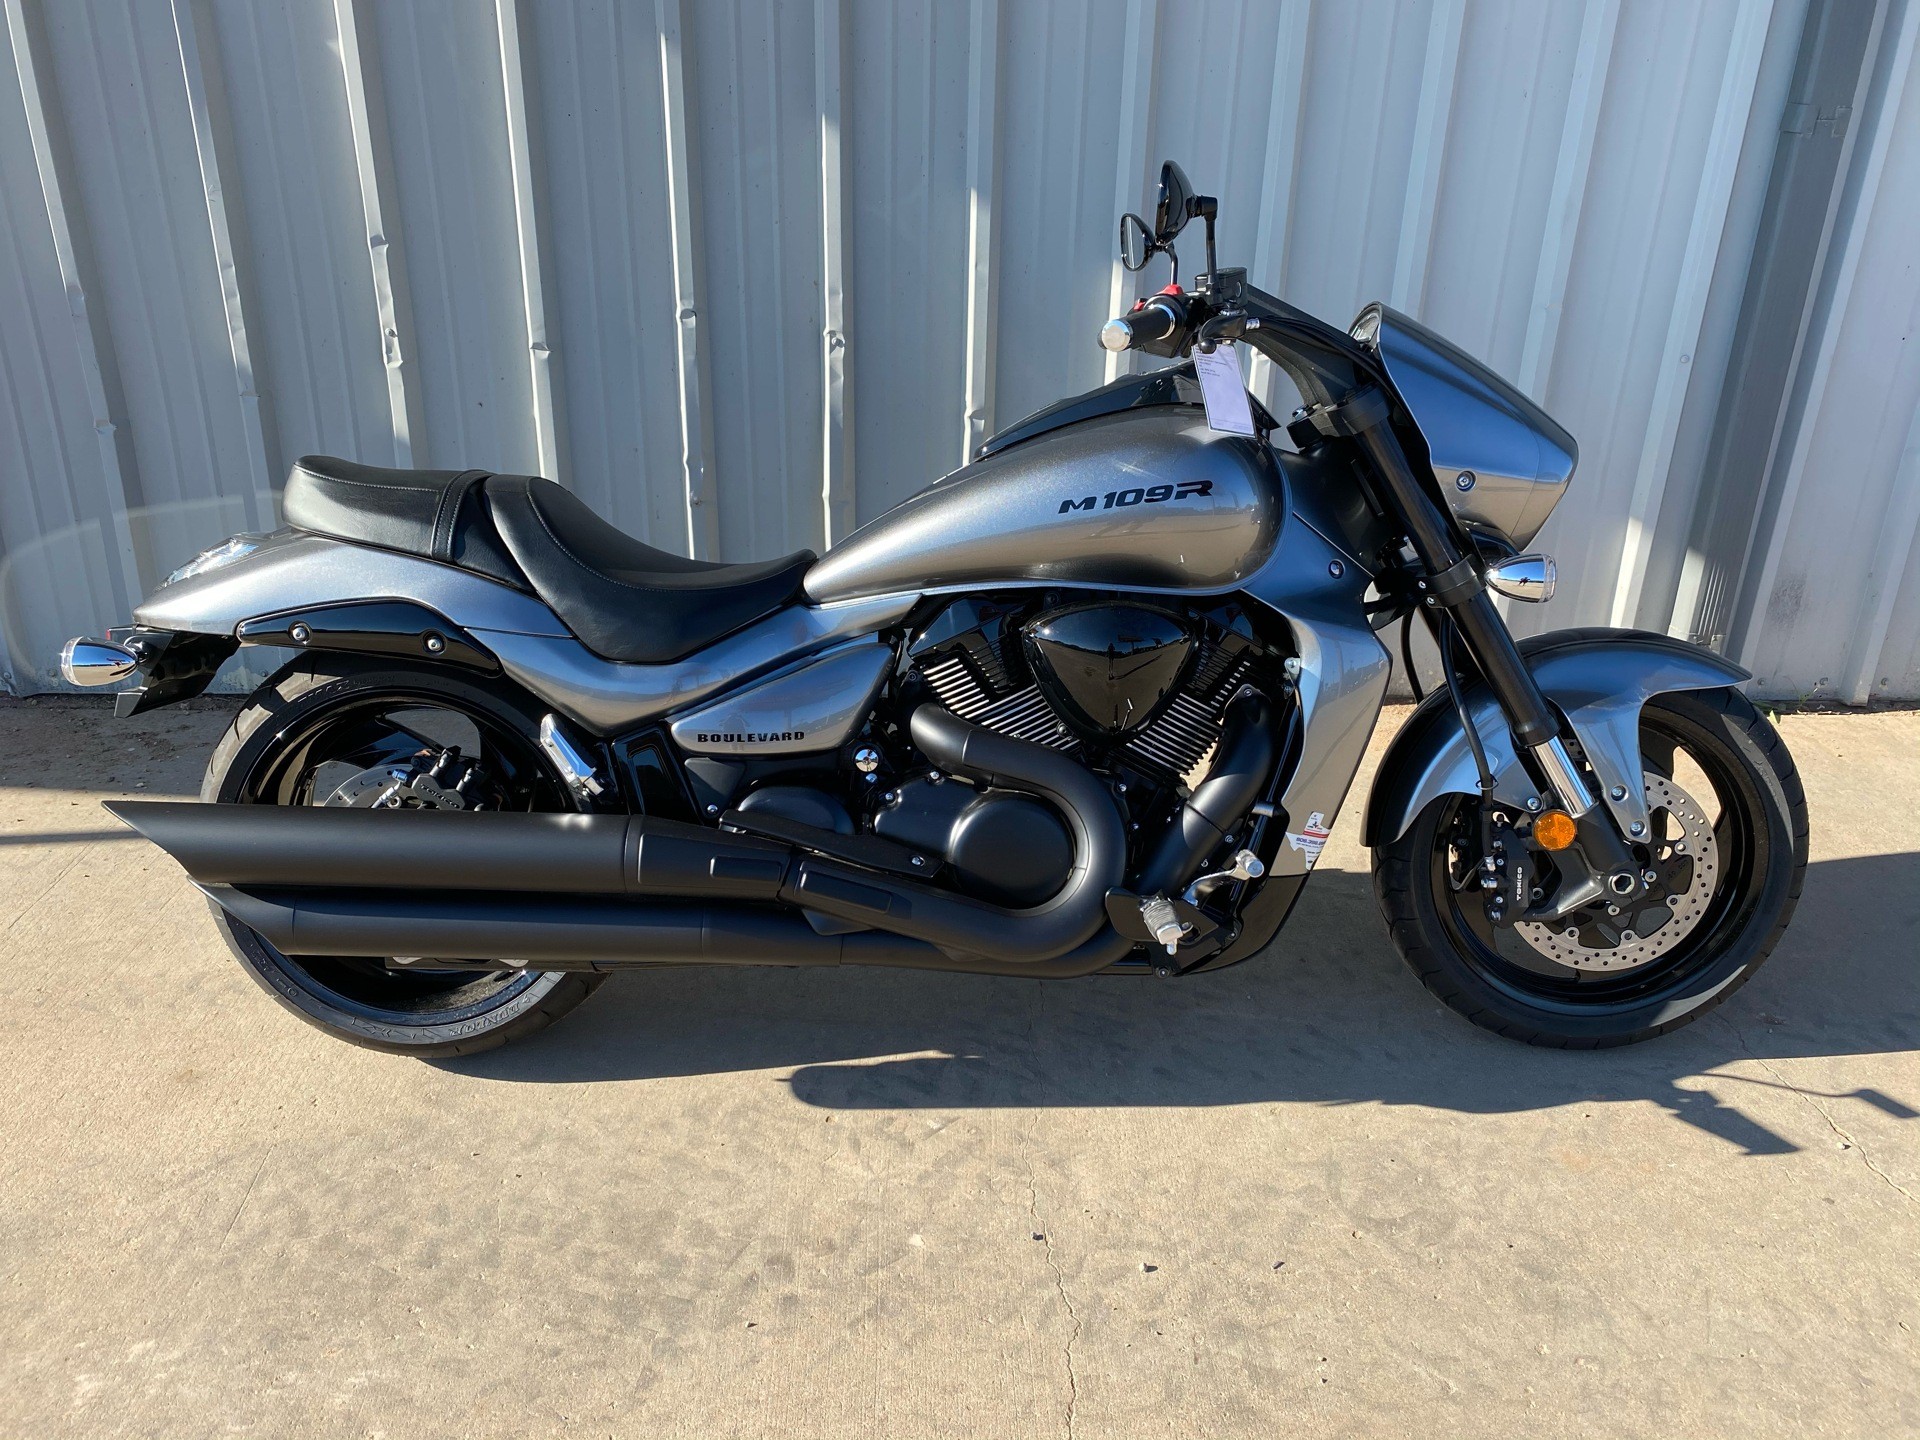 New 2020 Suzuki Boulevard M109r B O S S Motorcycles In Amarillo Tx Stock Number S100345 Lonestarpowersports Com